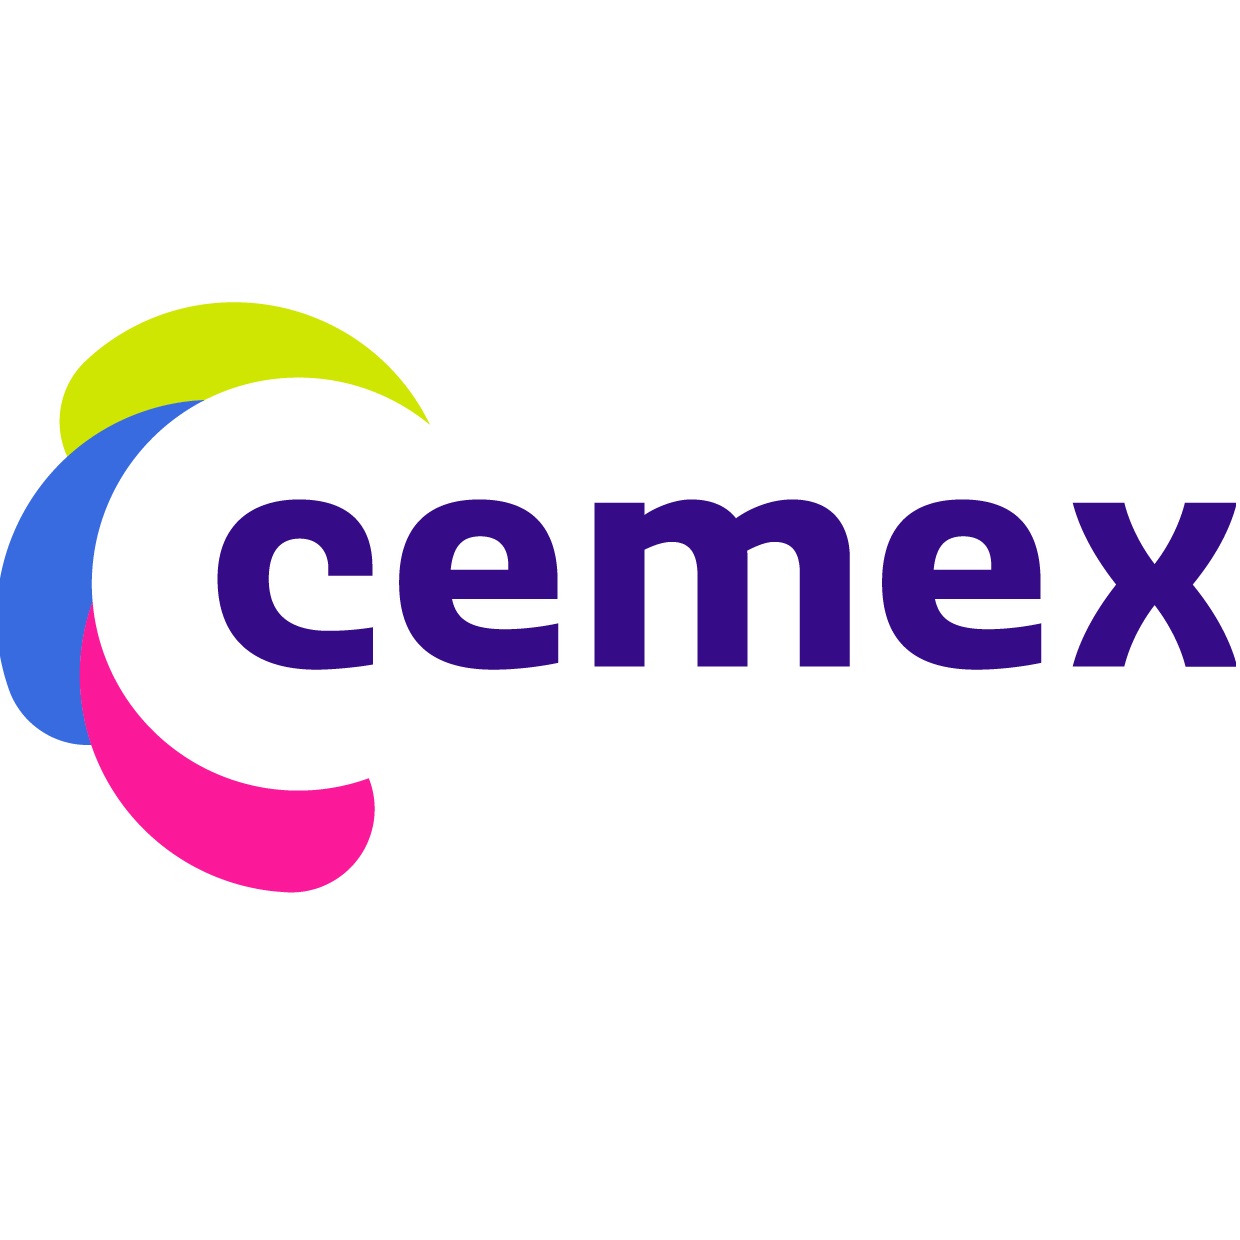 Cemex-logo-RGB_nieuw.jpg